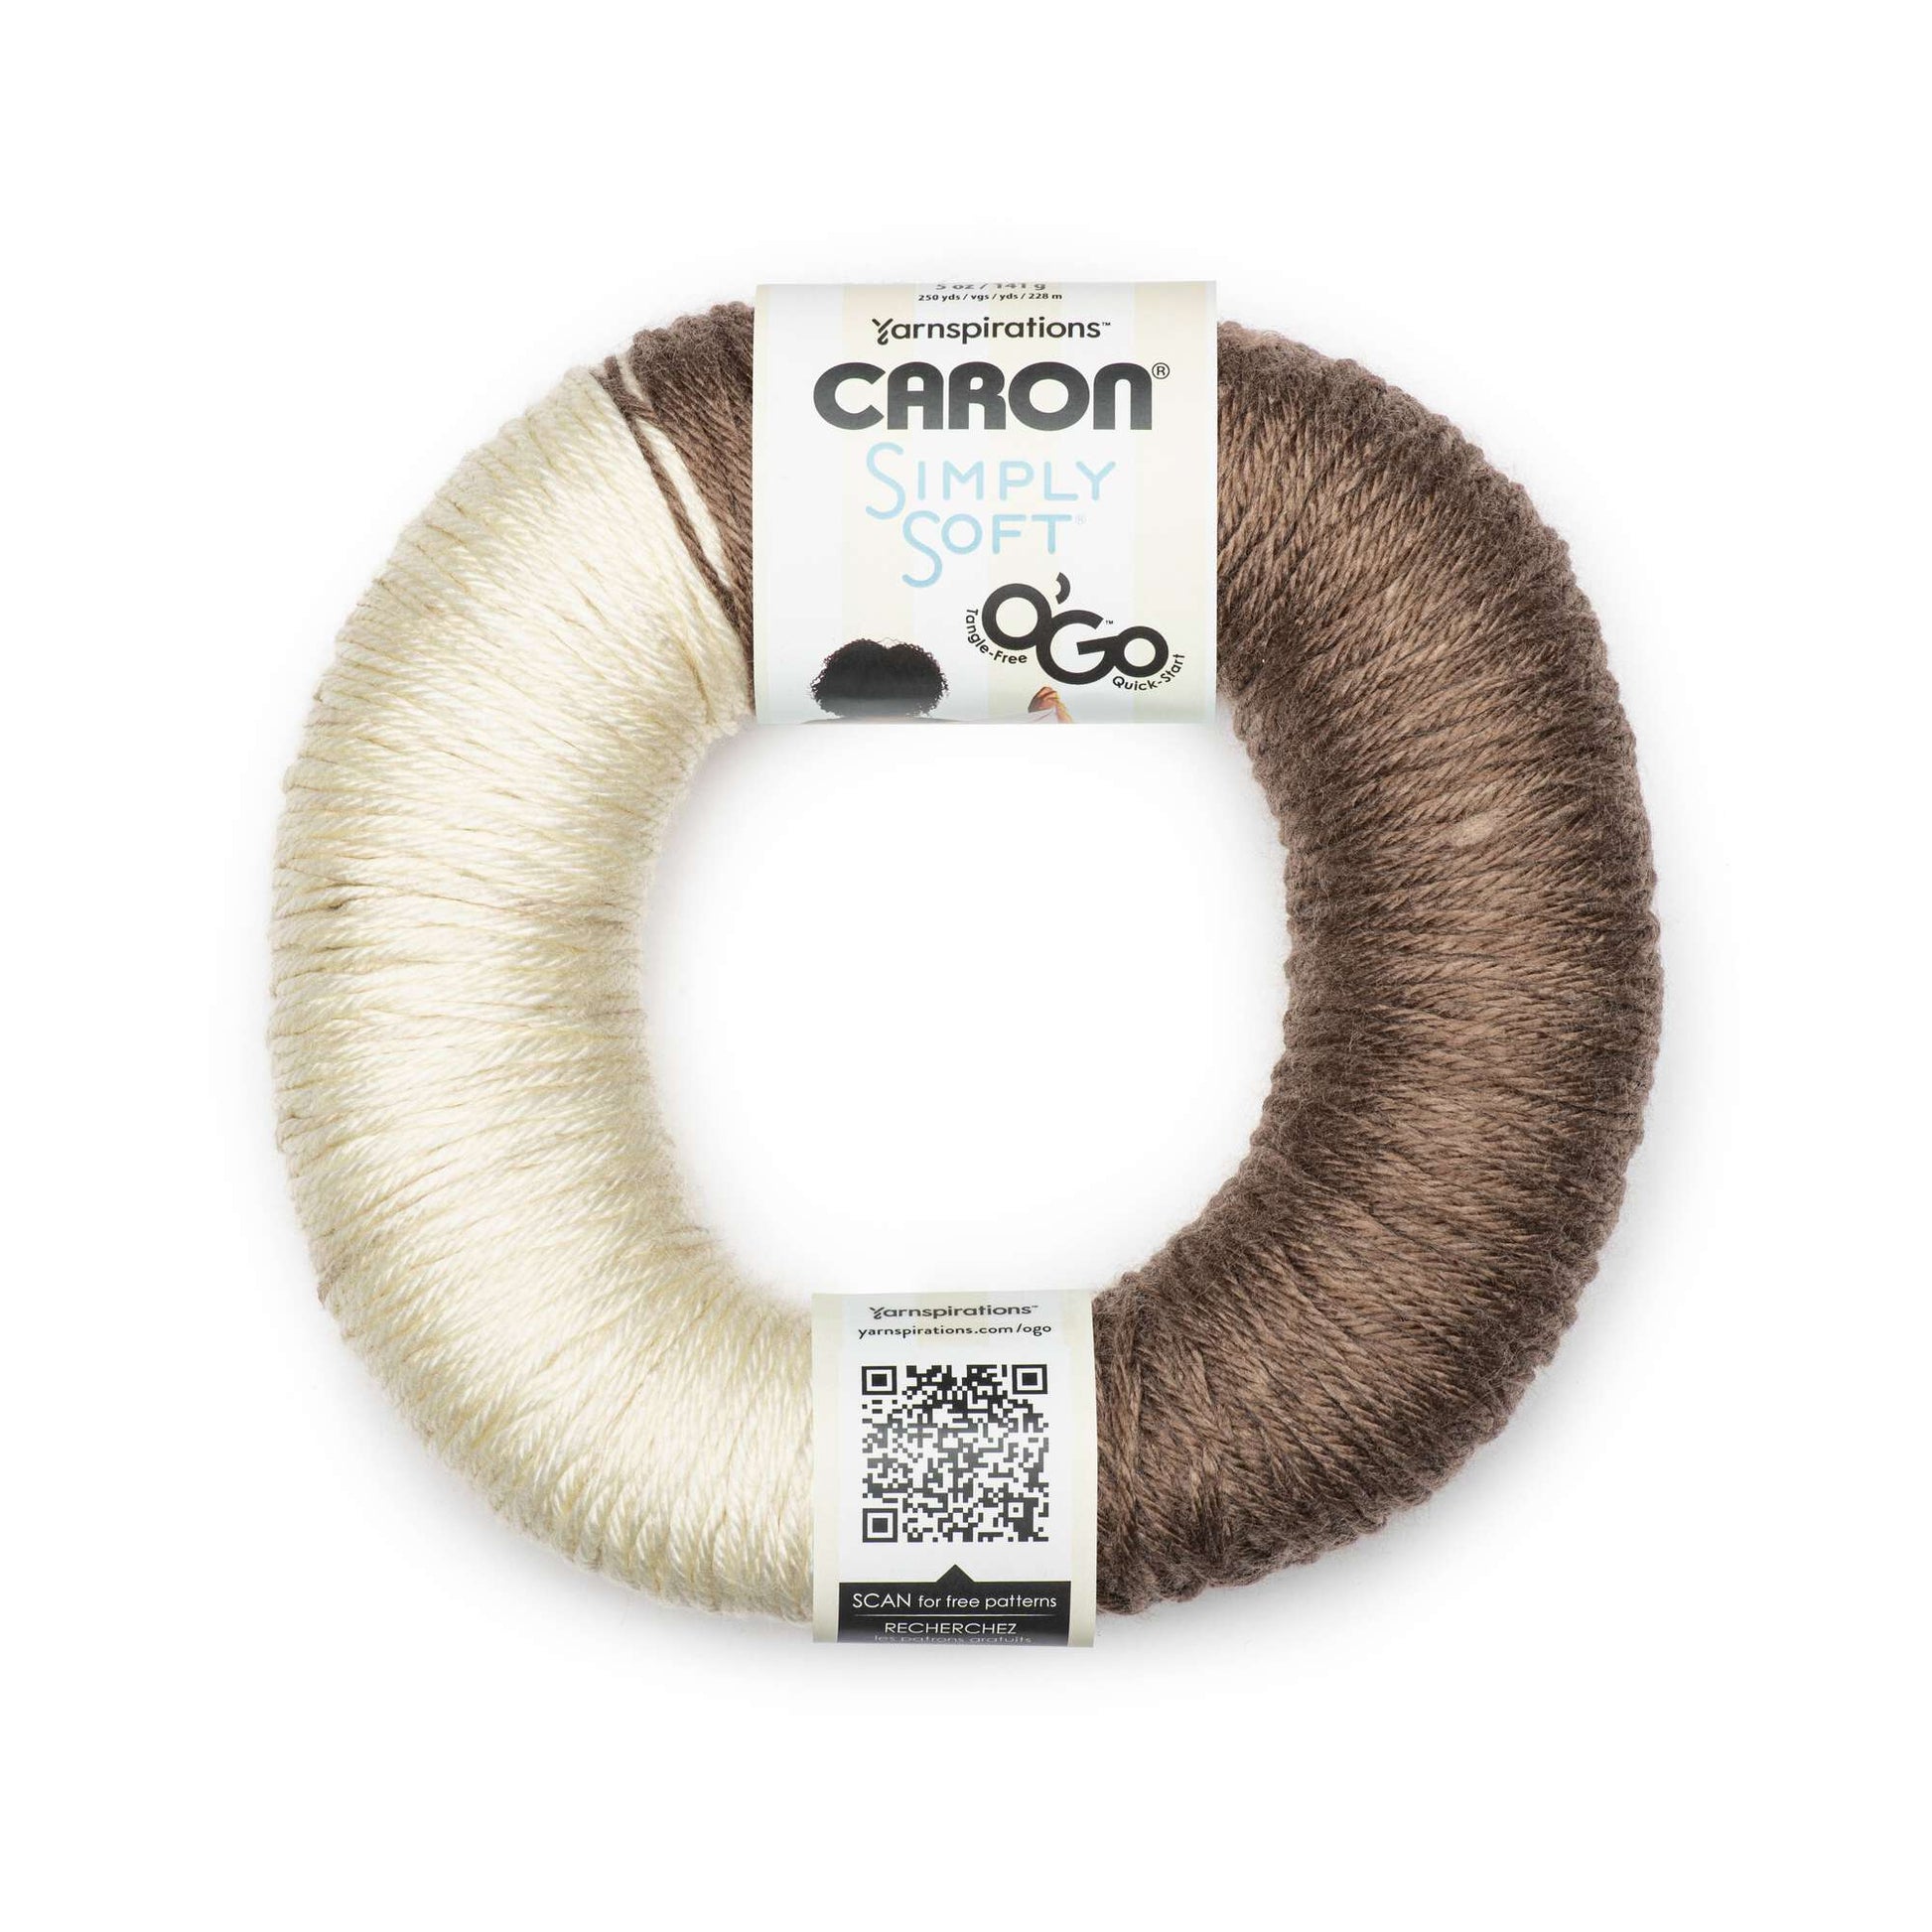 Caron Simply Soft O'Go (141g/5oz) - Clearance Shades* Almond Off White